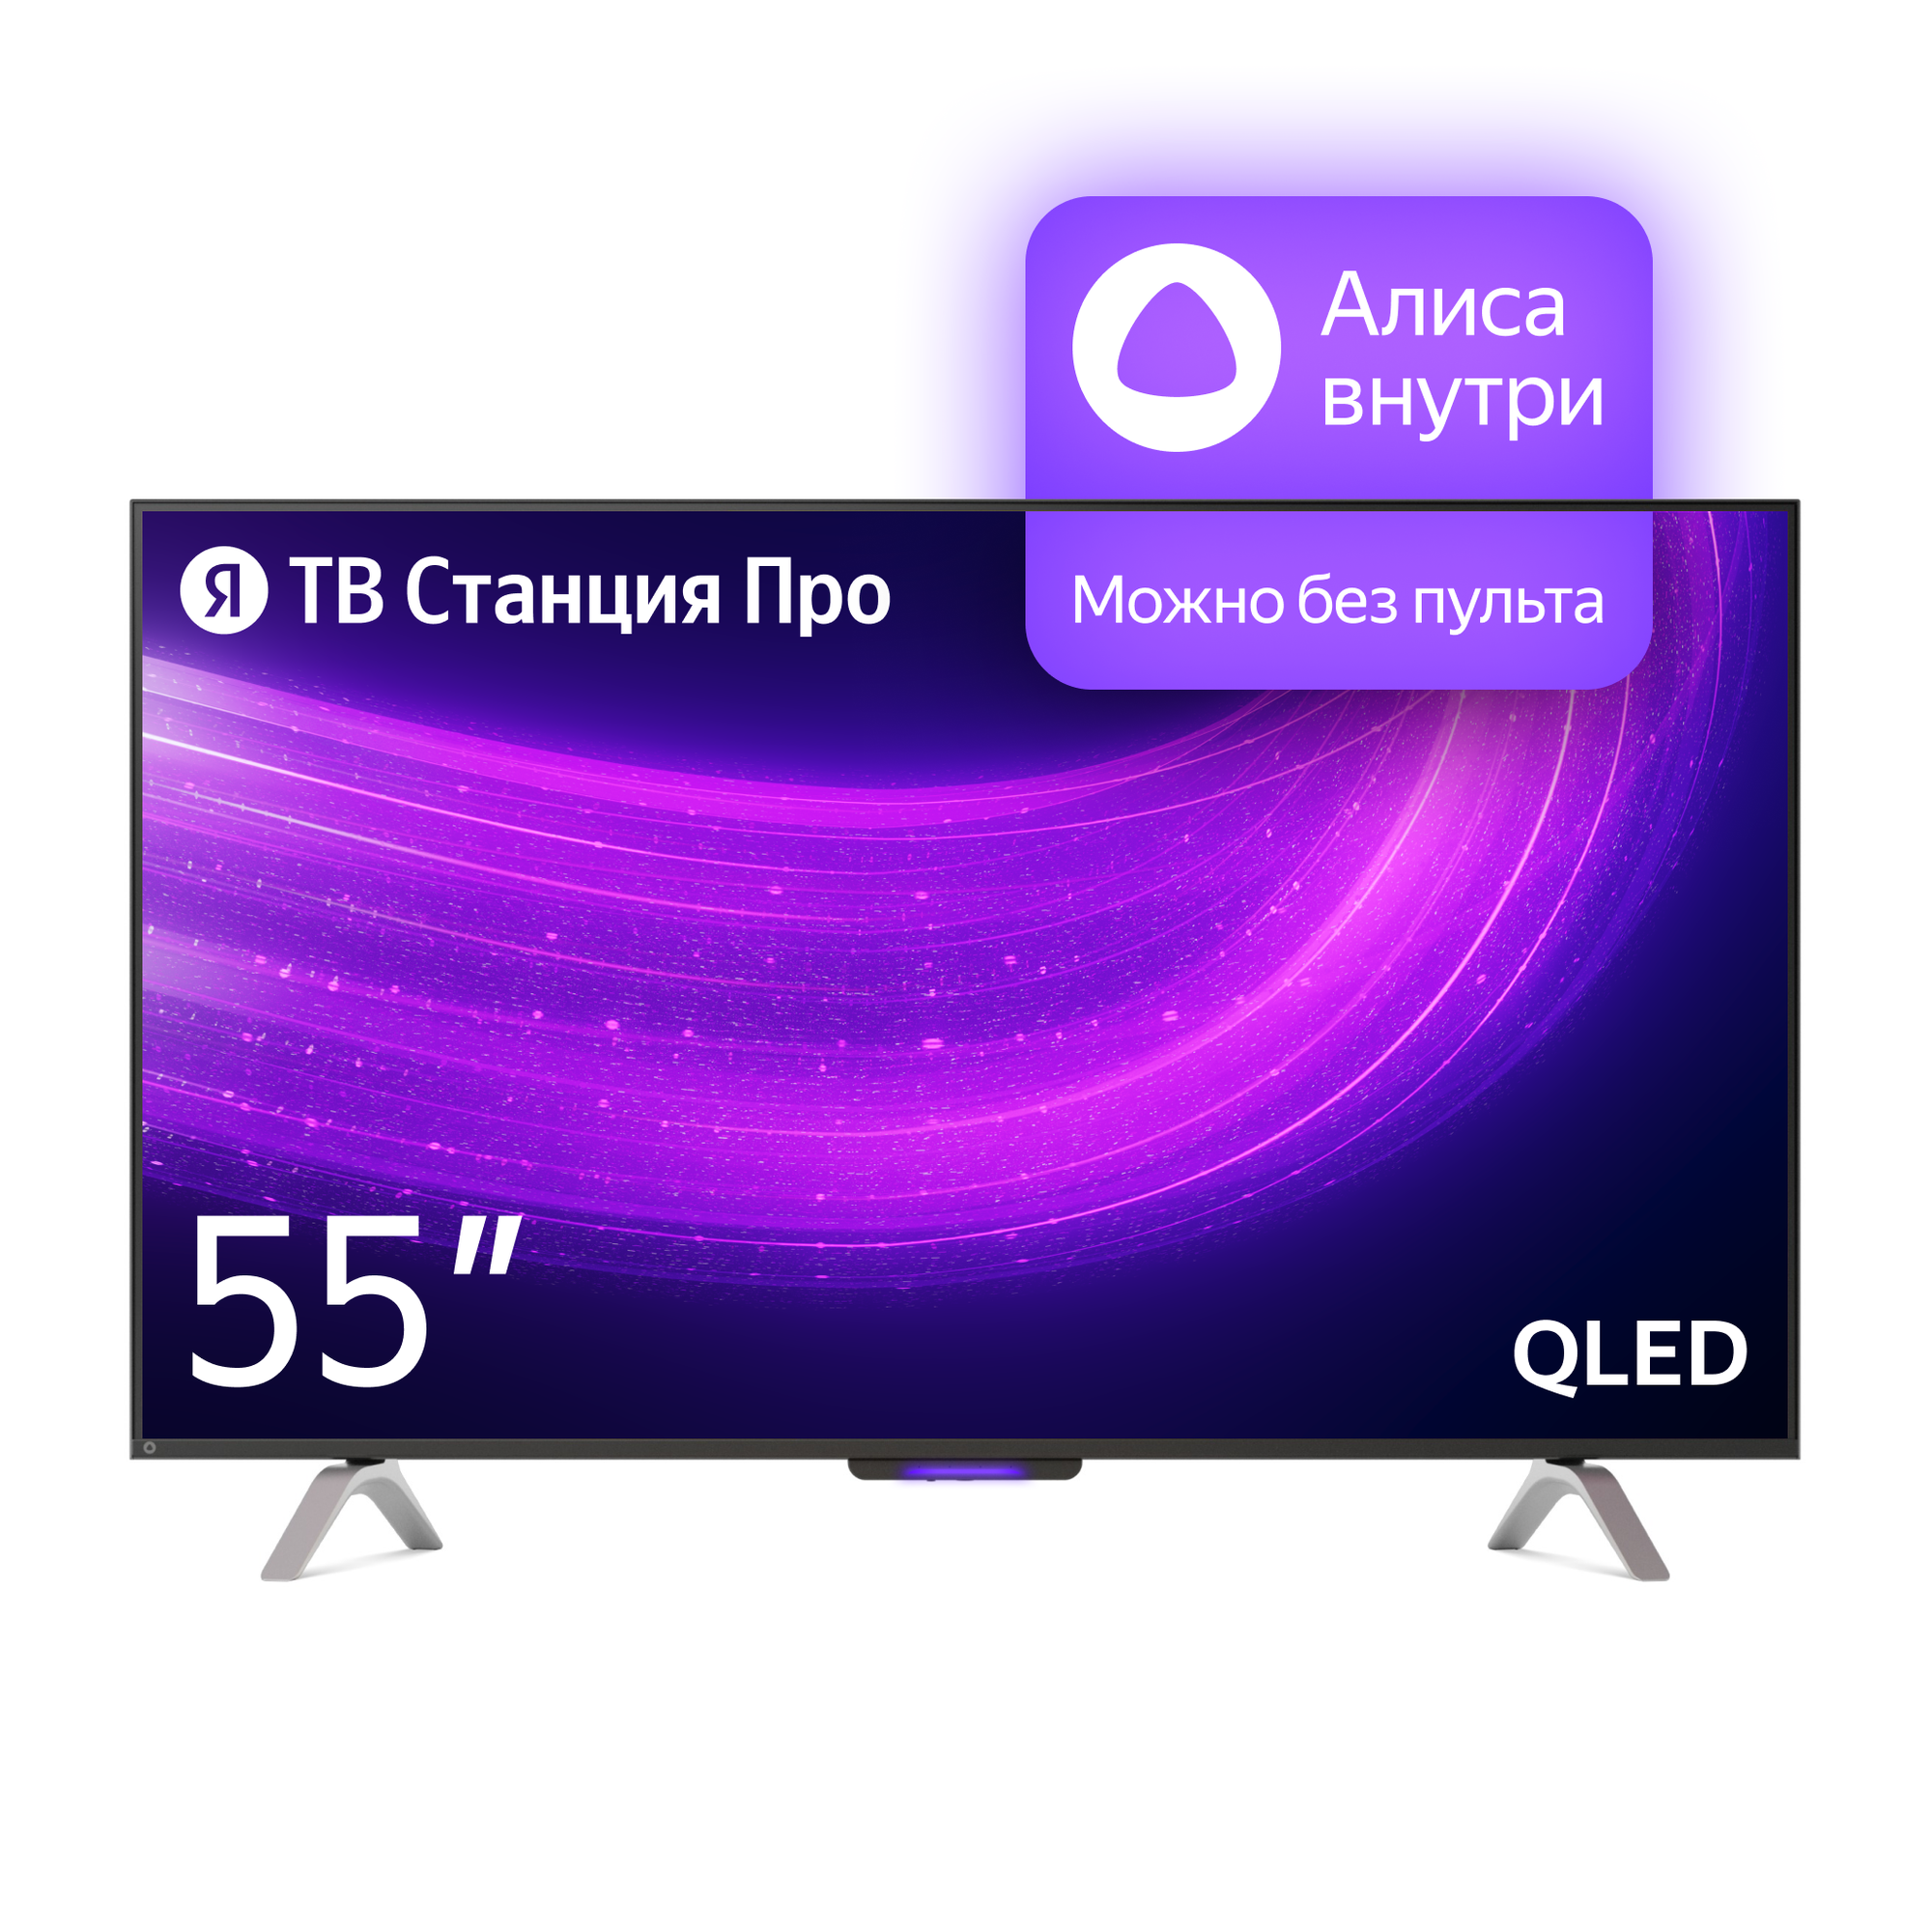 Телевизор Яндекс ТВ Станция Про с Алисой 55" 4K UHD, черный